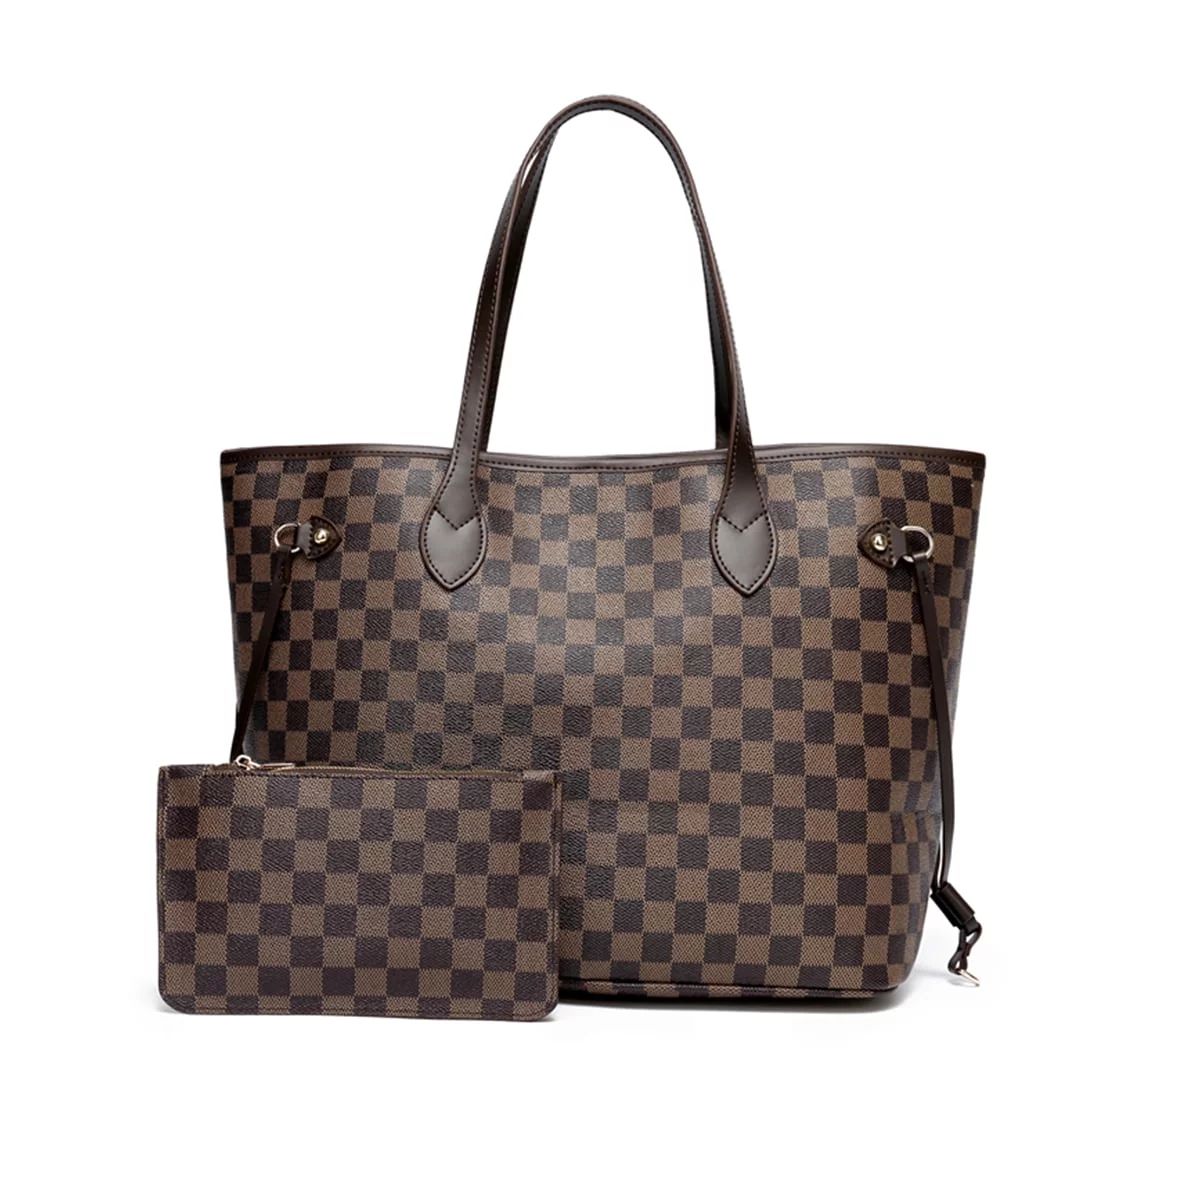 ZINTVVD Women's Handbag Checkered Shoulder Bag Tote Fashion Casual Bag -Leather (Checkered Brown)... | Walmart (US)